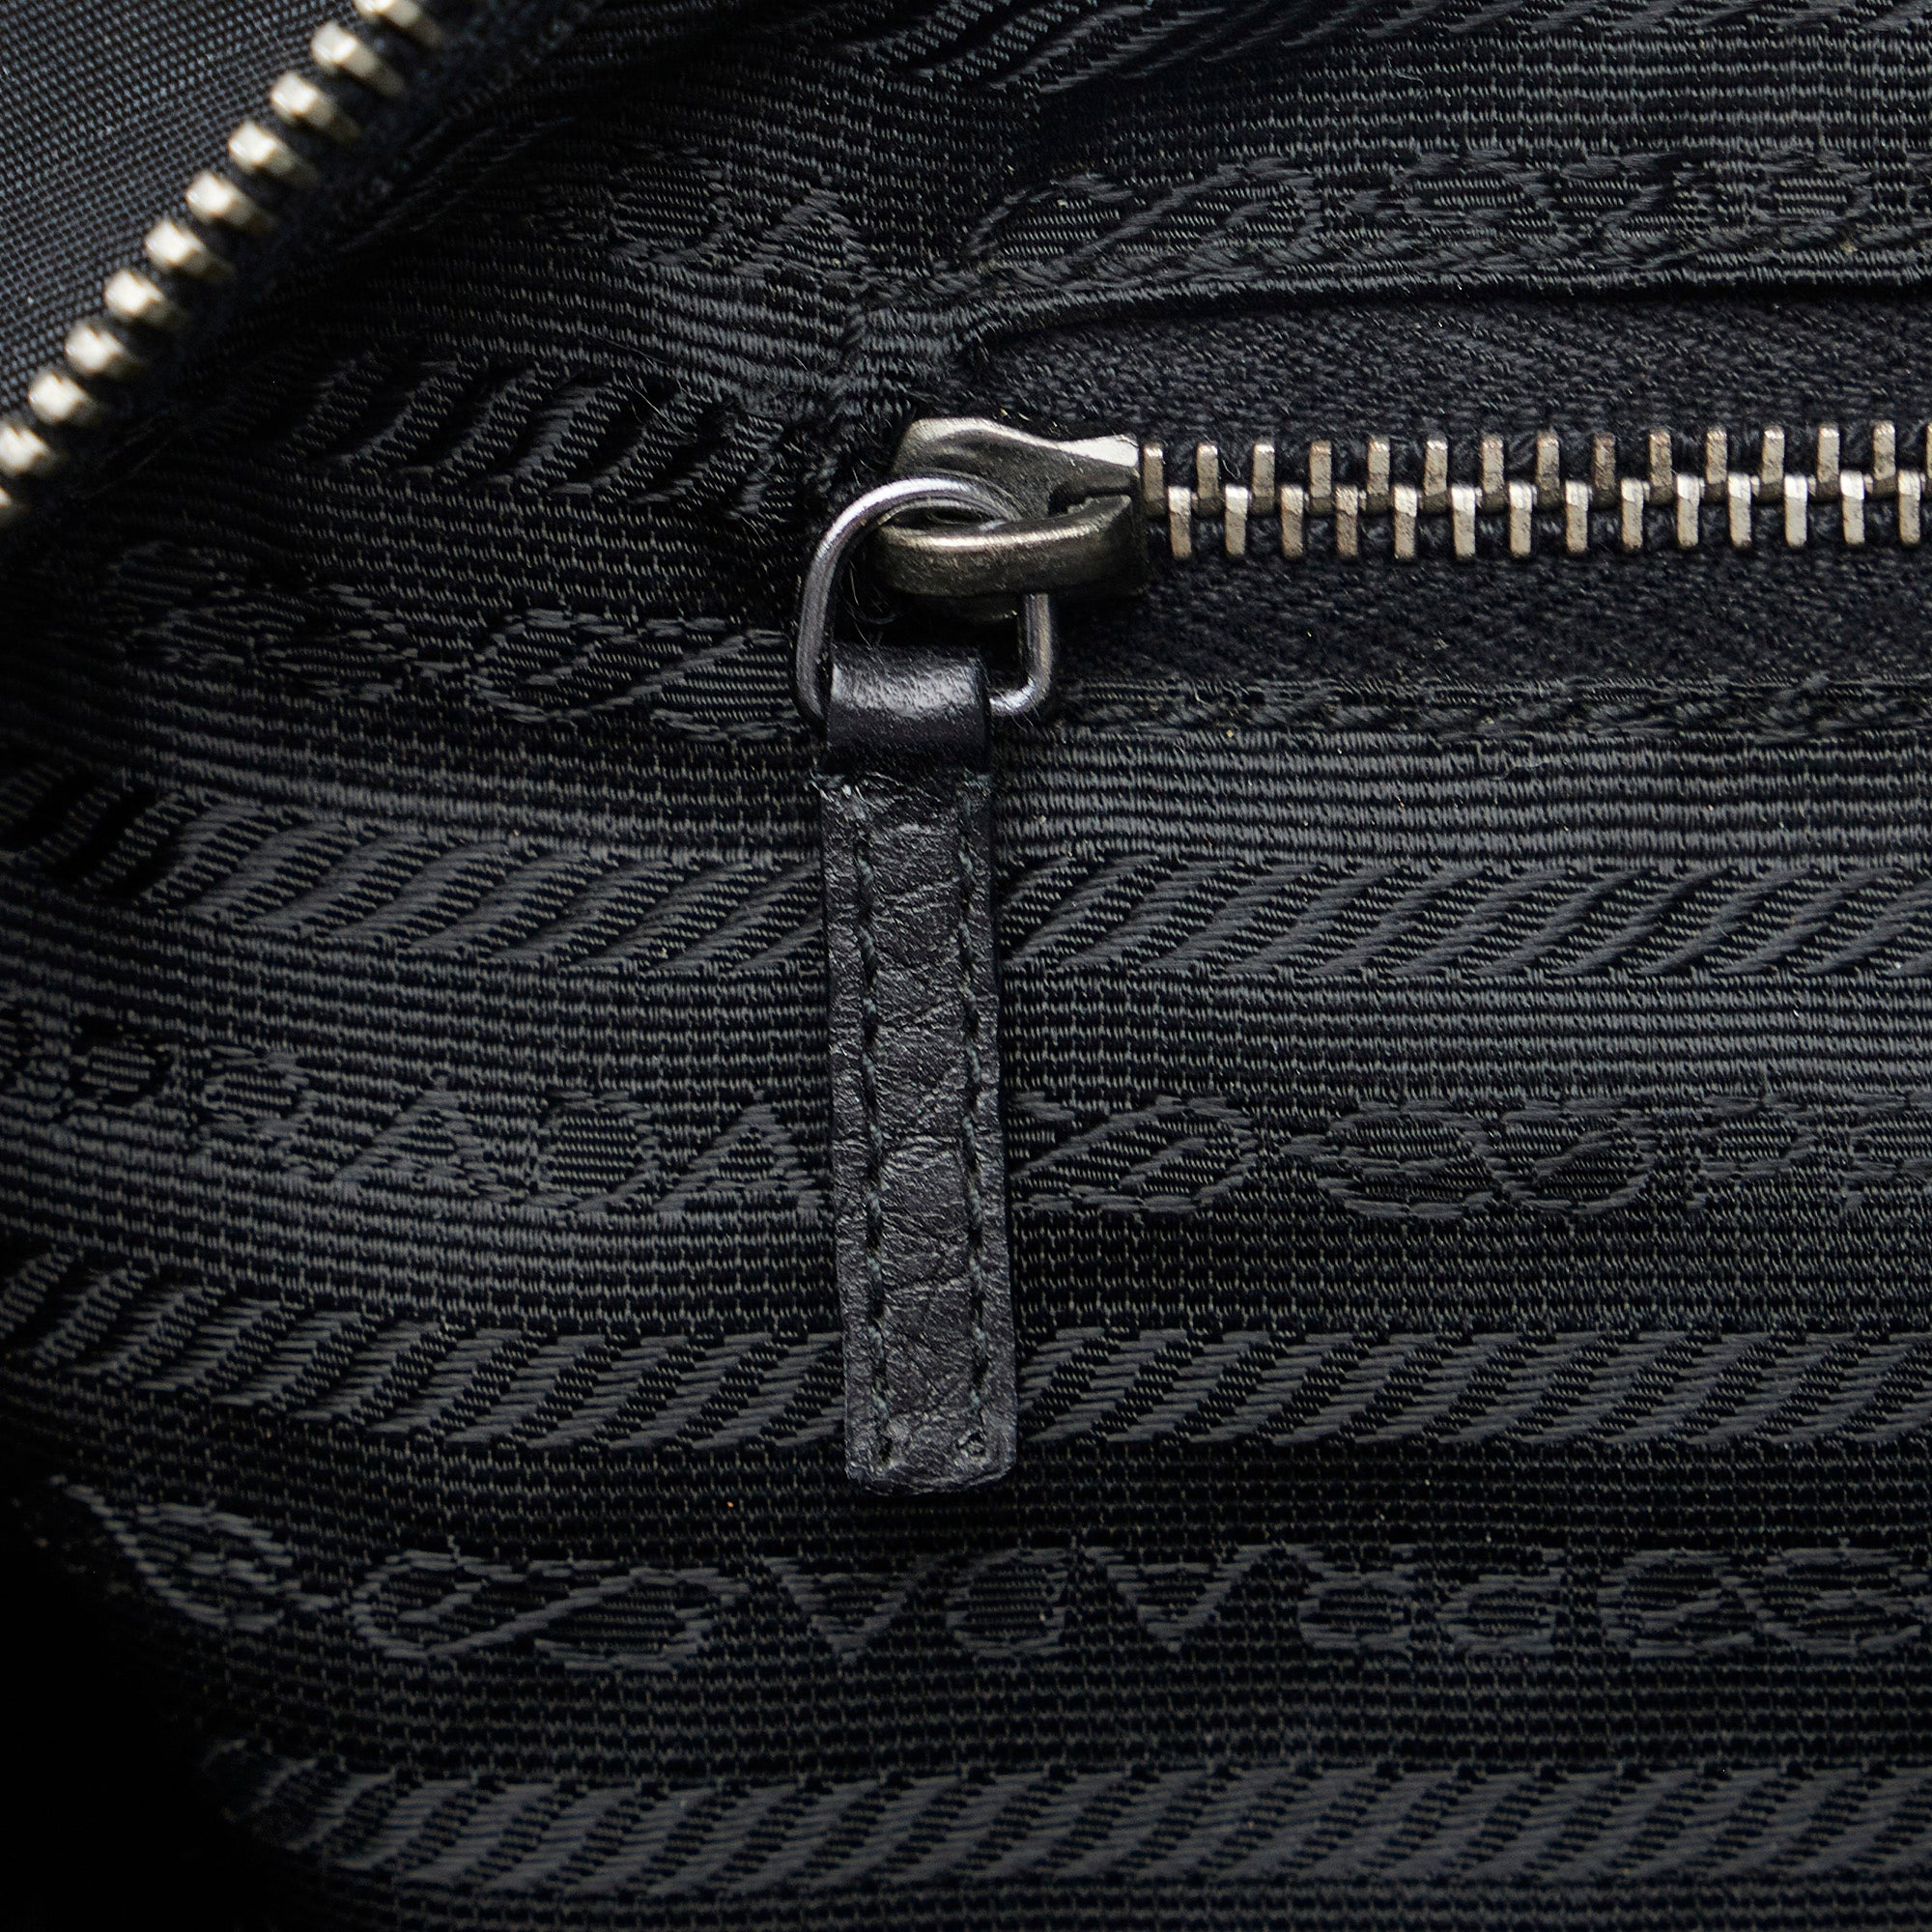 Black Prada Tessuto Re - PRADA Nylon Leather Shoulder Bag Purse Black NERO  - RvceShops Revival